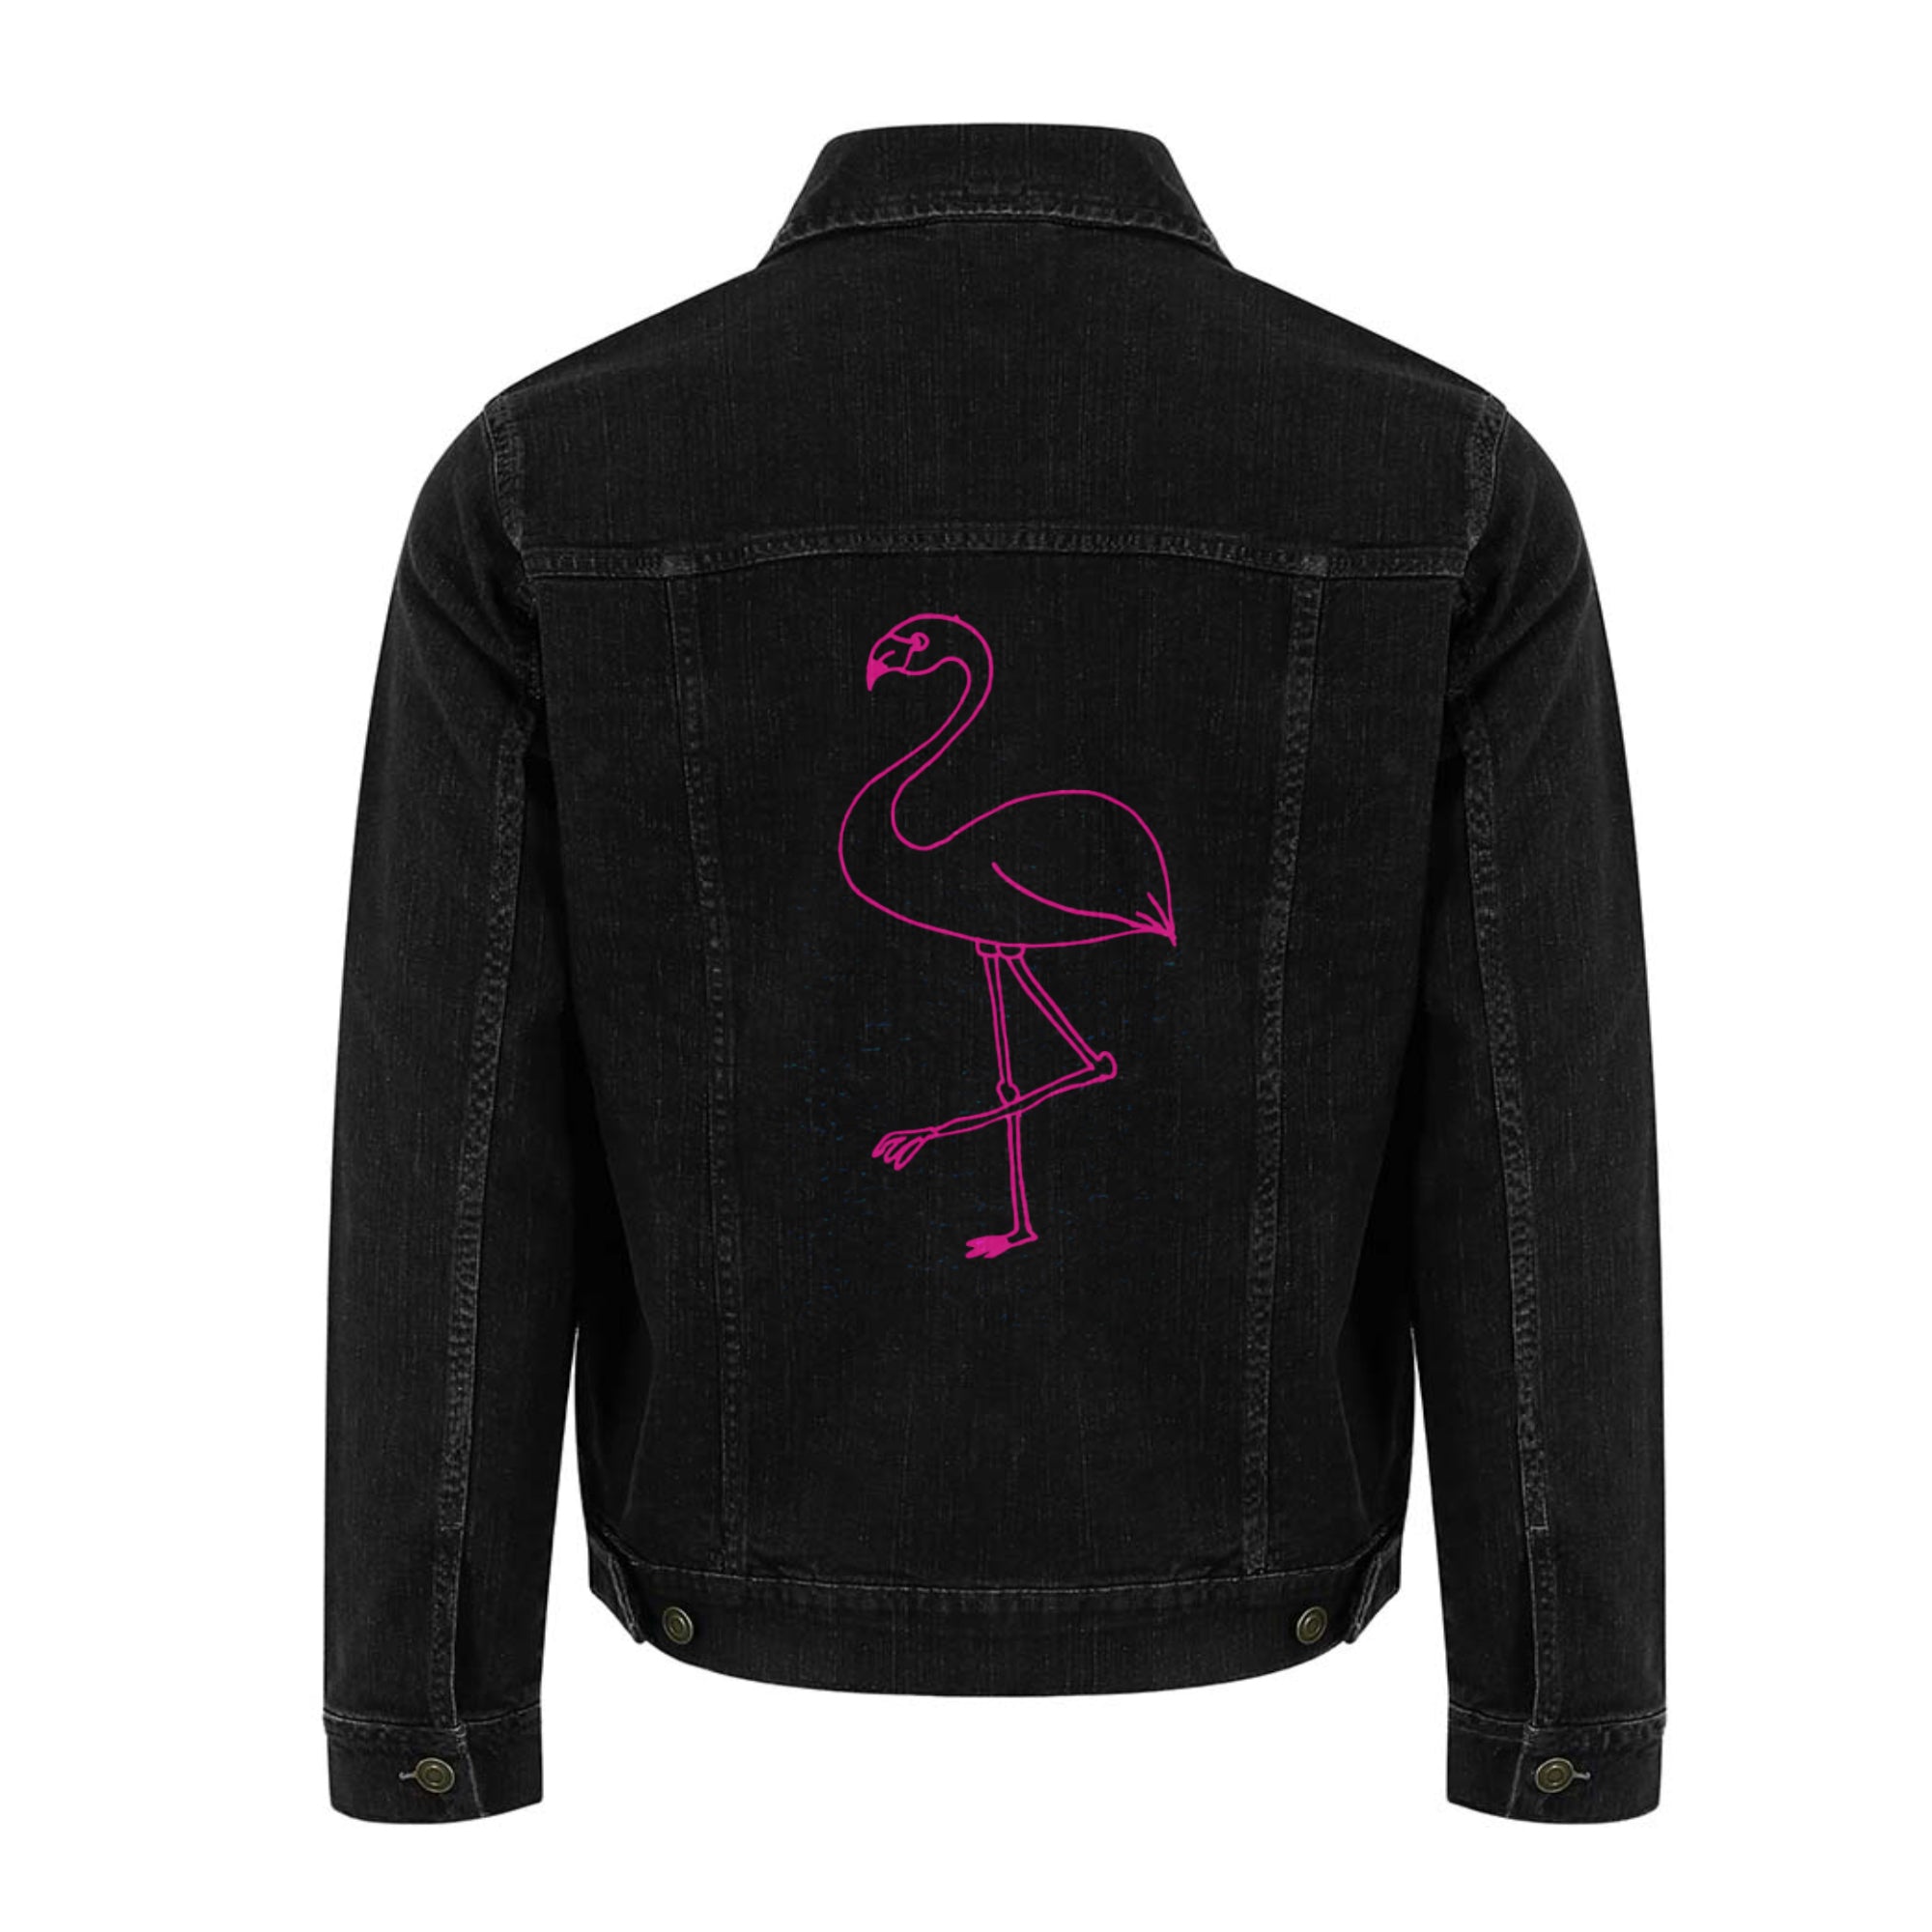 Flamingo denim jacket